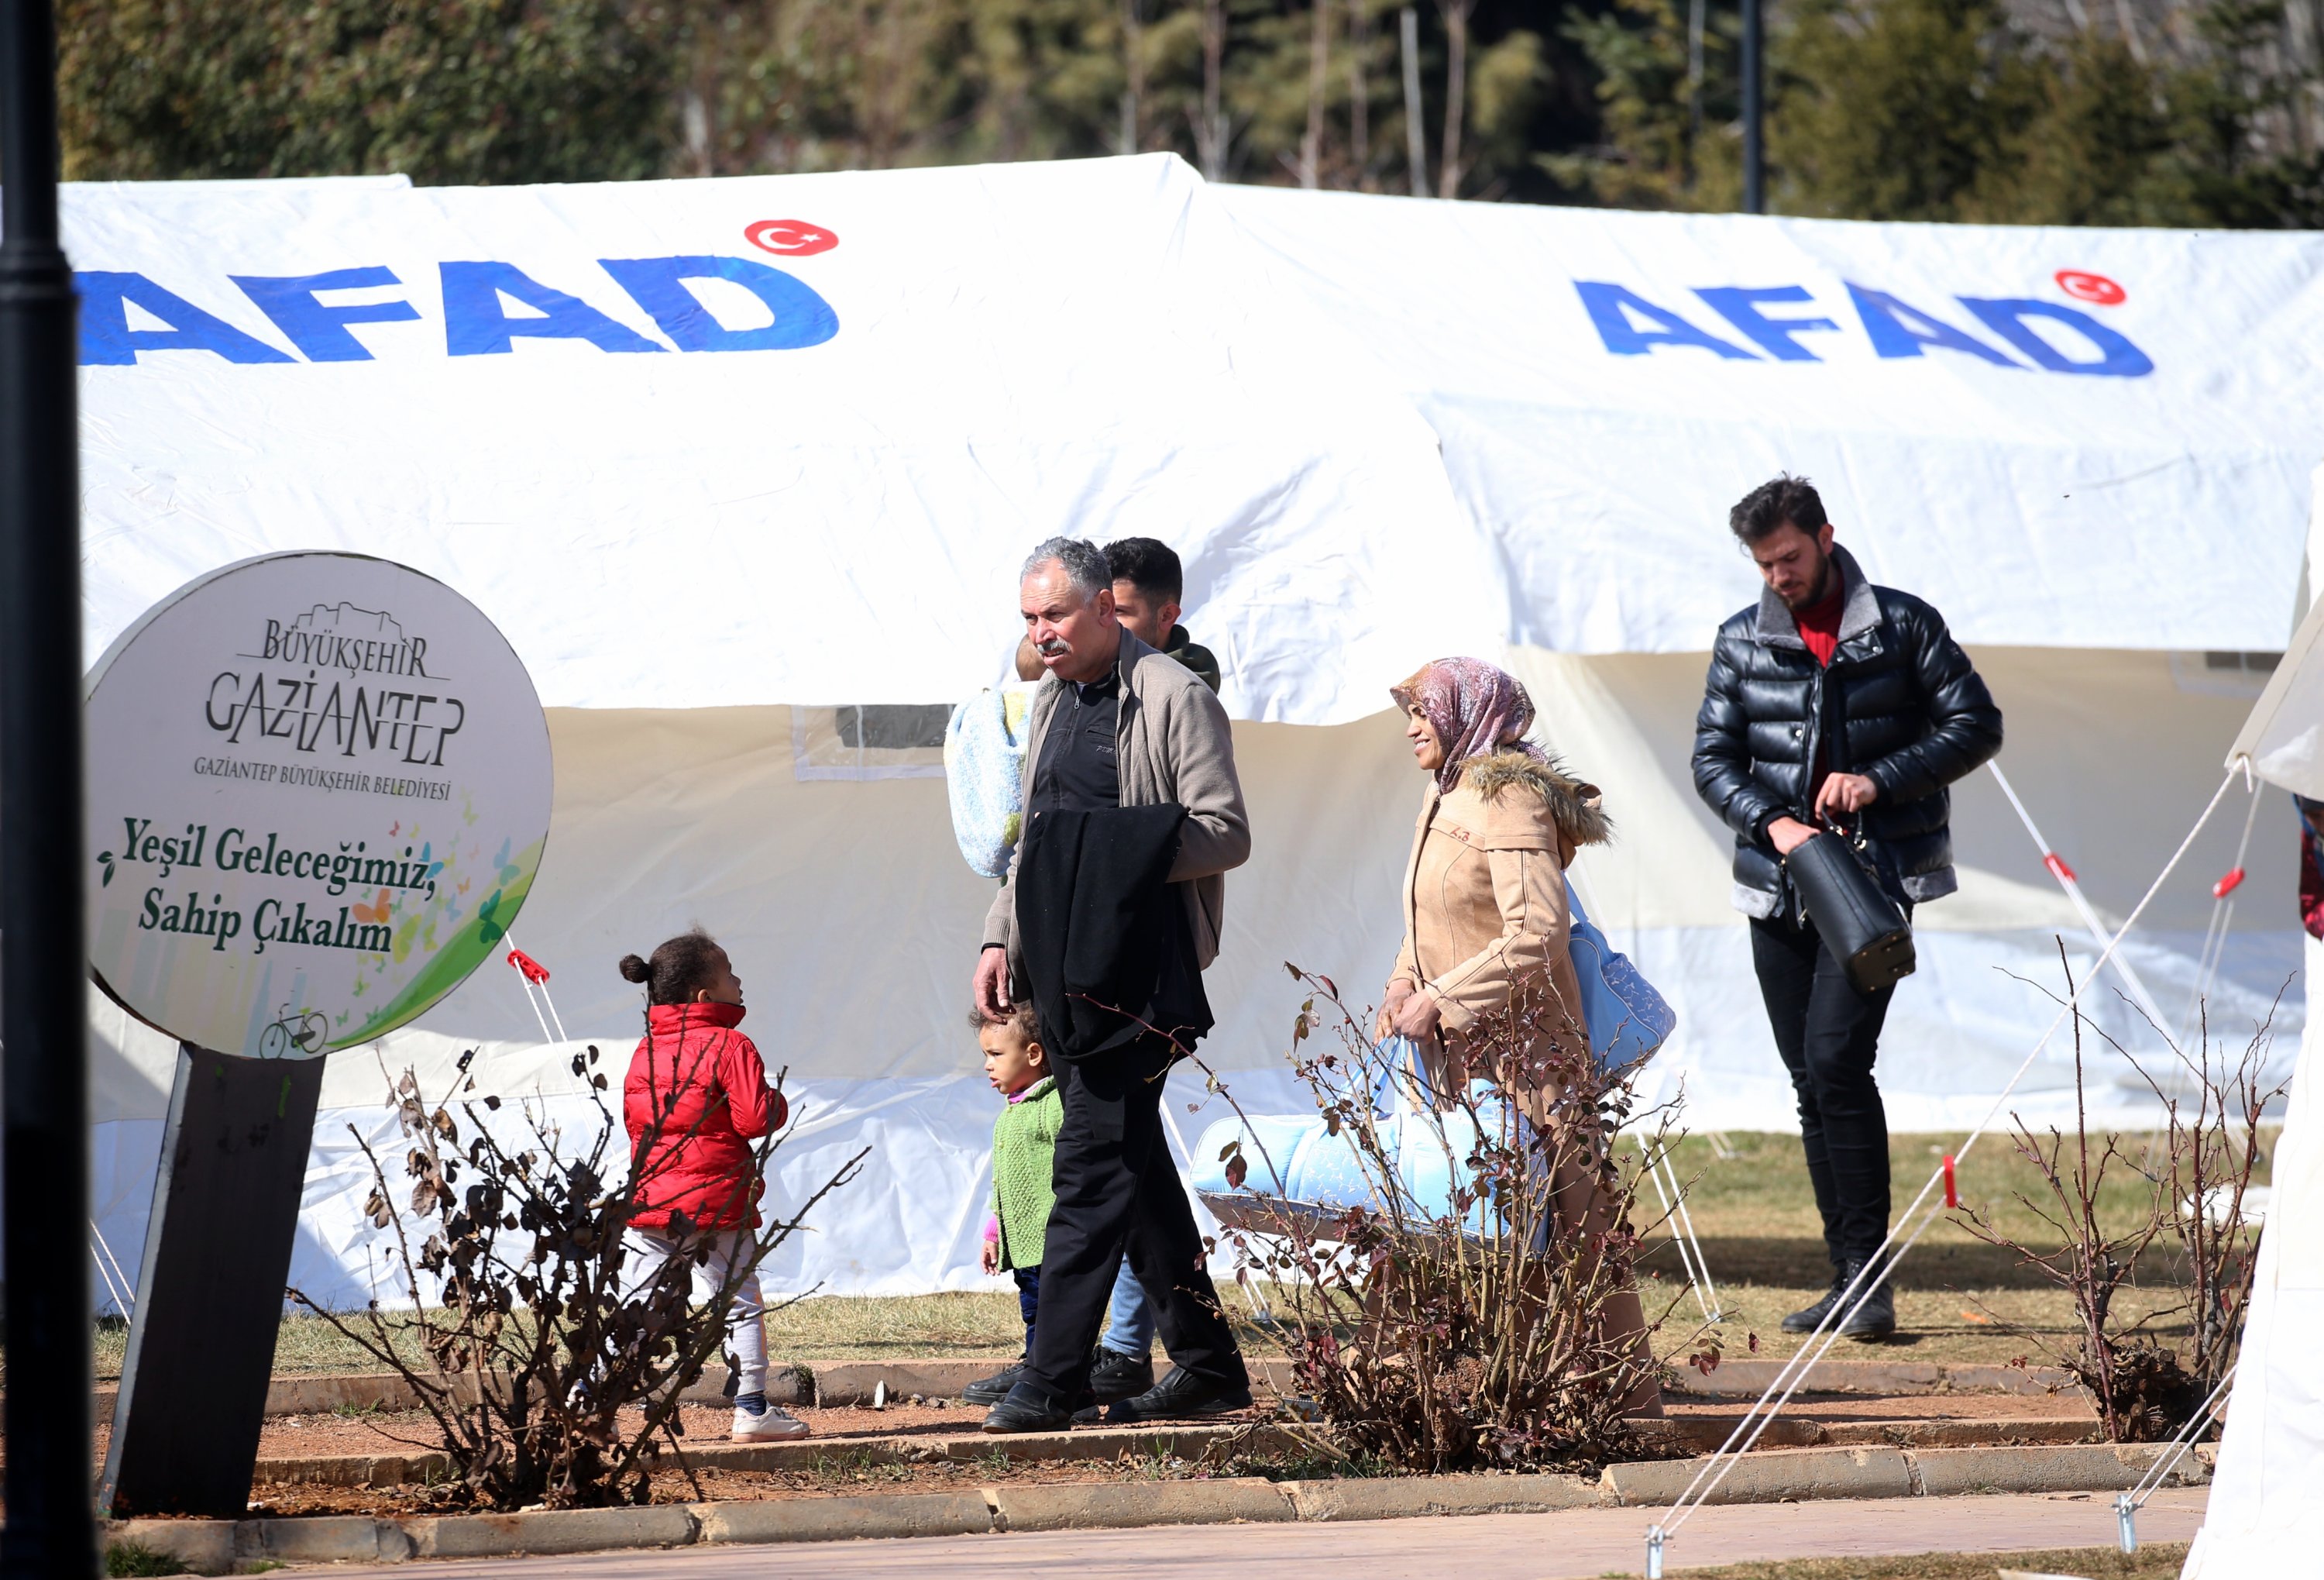 Orang-orang di luar tenda darurat AFAD Taman Festival Kota Metropolitan Gaziantep setelah gempa bumi Kahramanmaraş, Gaziantep, Türkiye, 20 Februari 2023. (Foto AA)